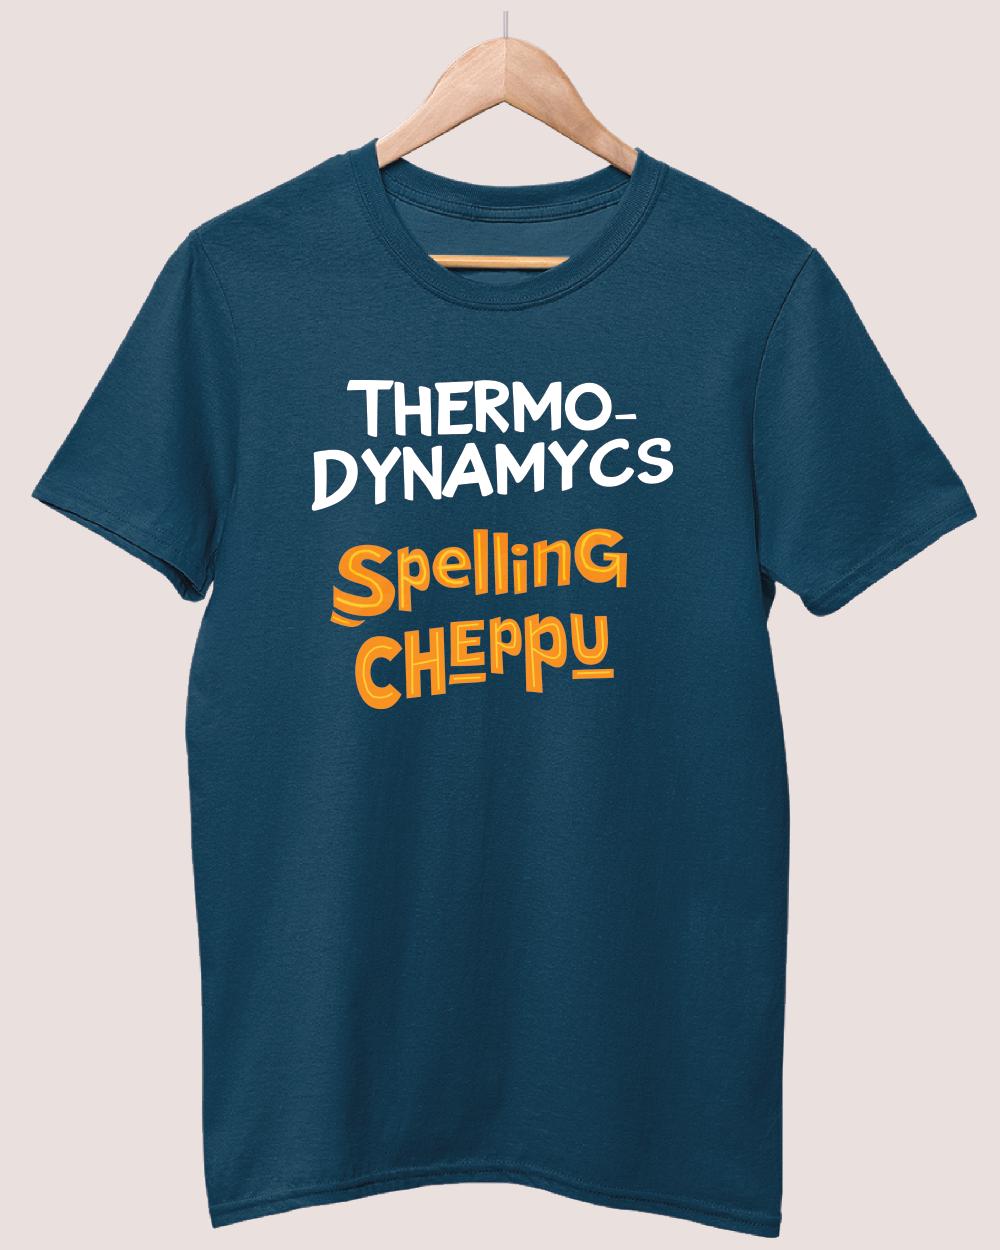 Thermodynamics Spelling Cheppu T-shirt